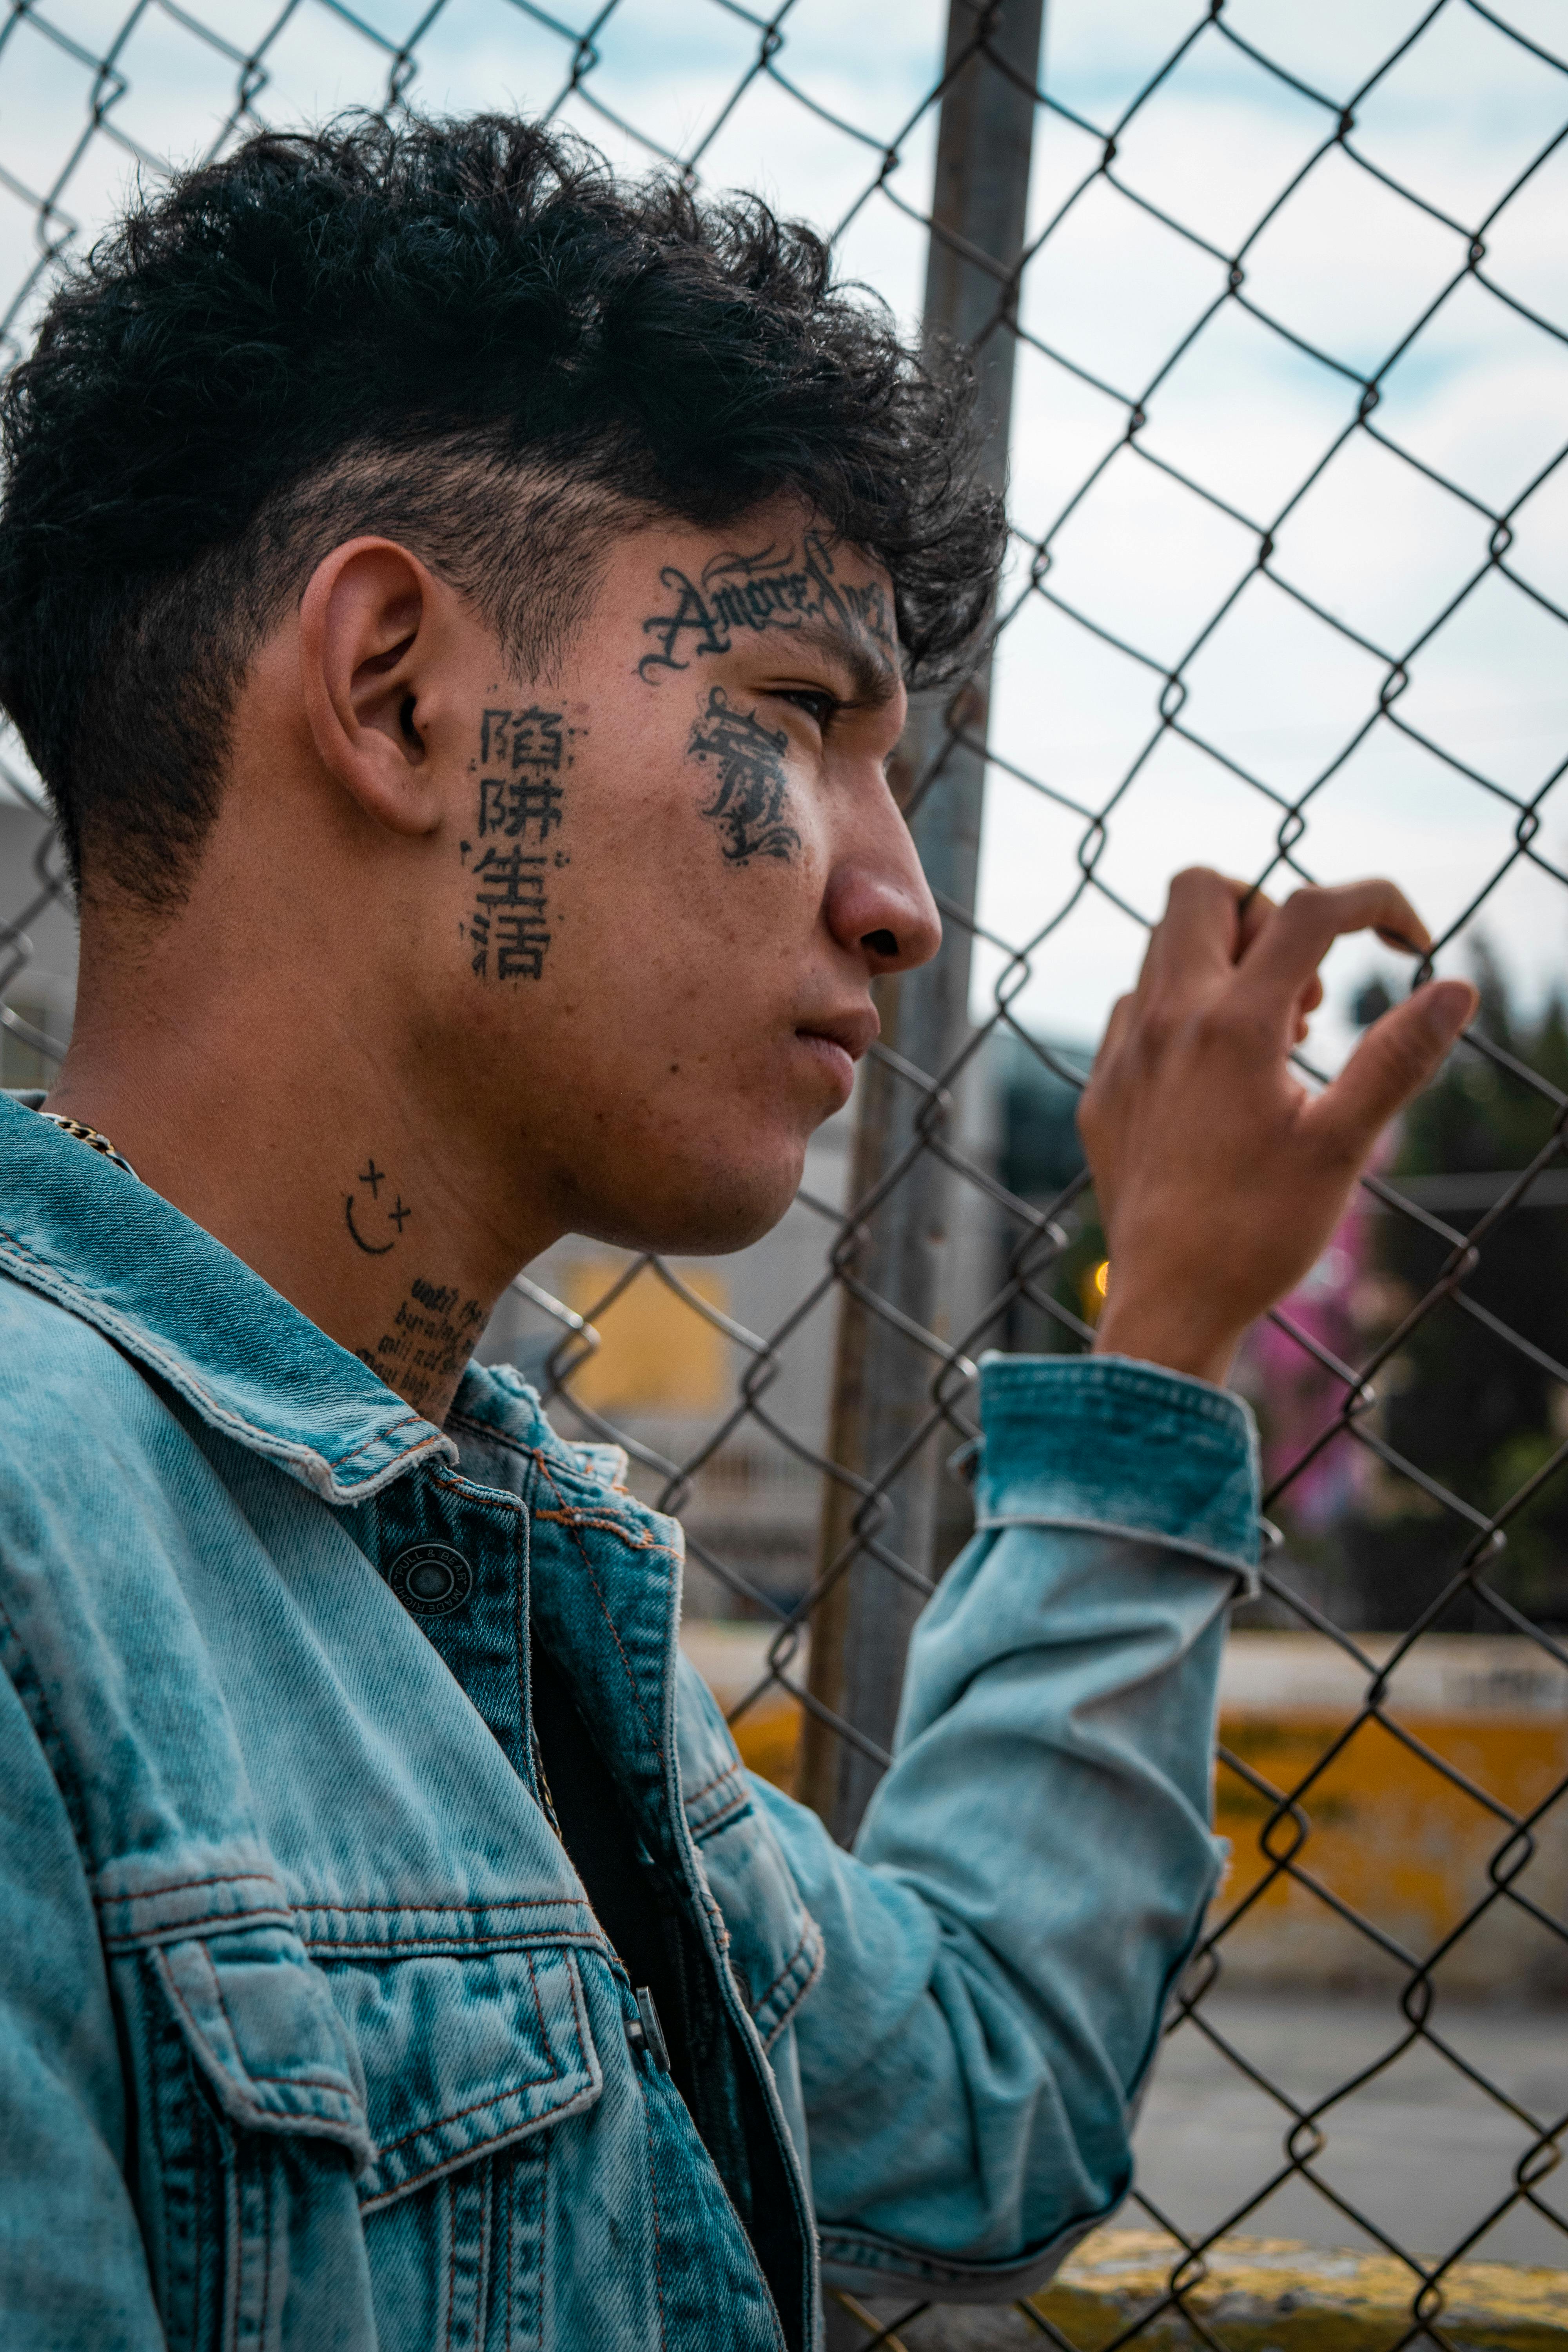 fences face tattoos